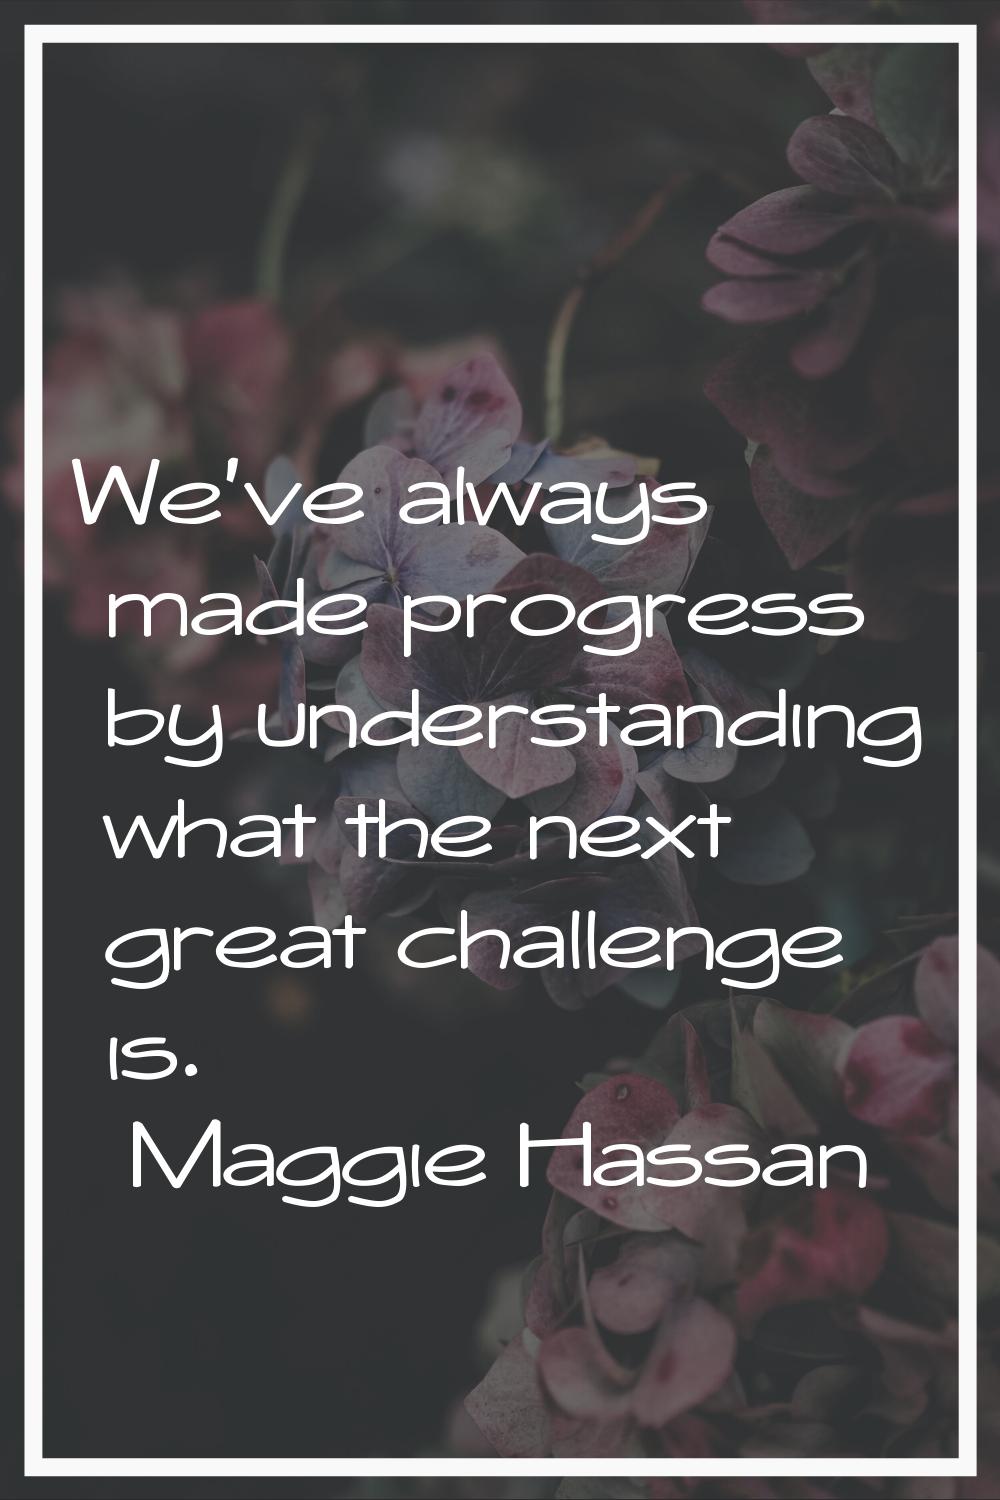 We've always made progress by understanding what the next great challenge is.